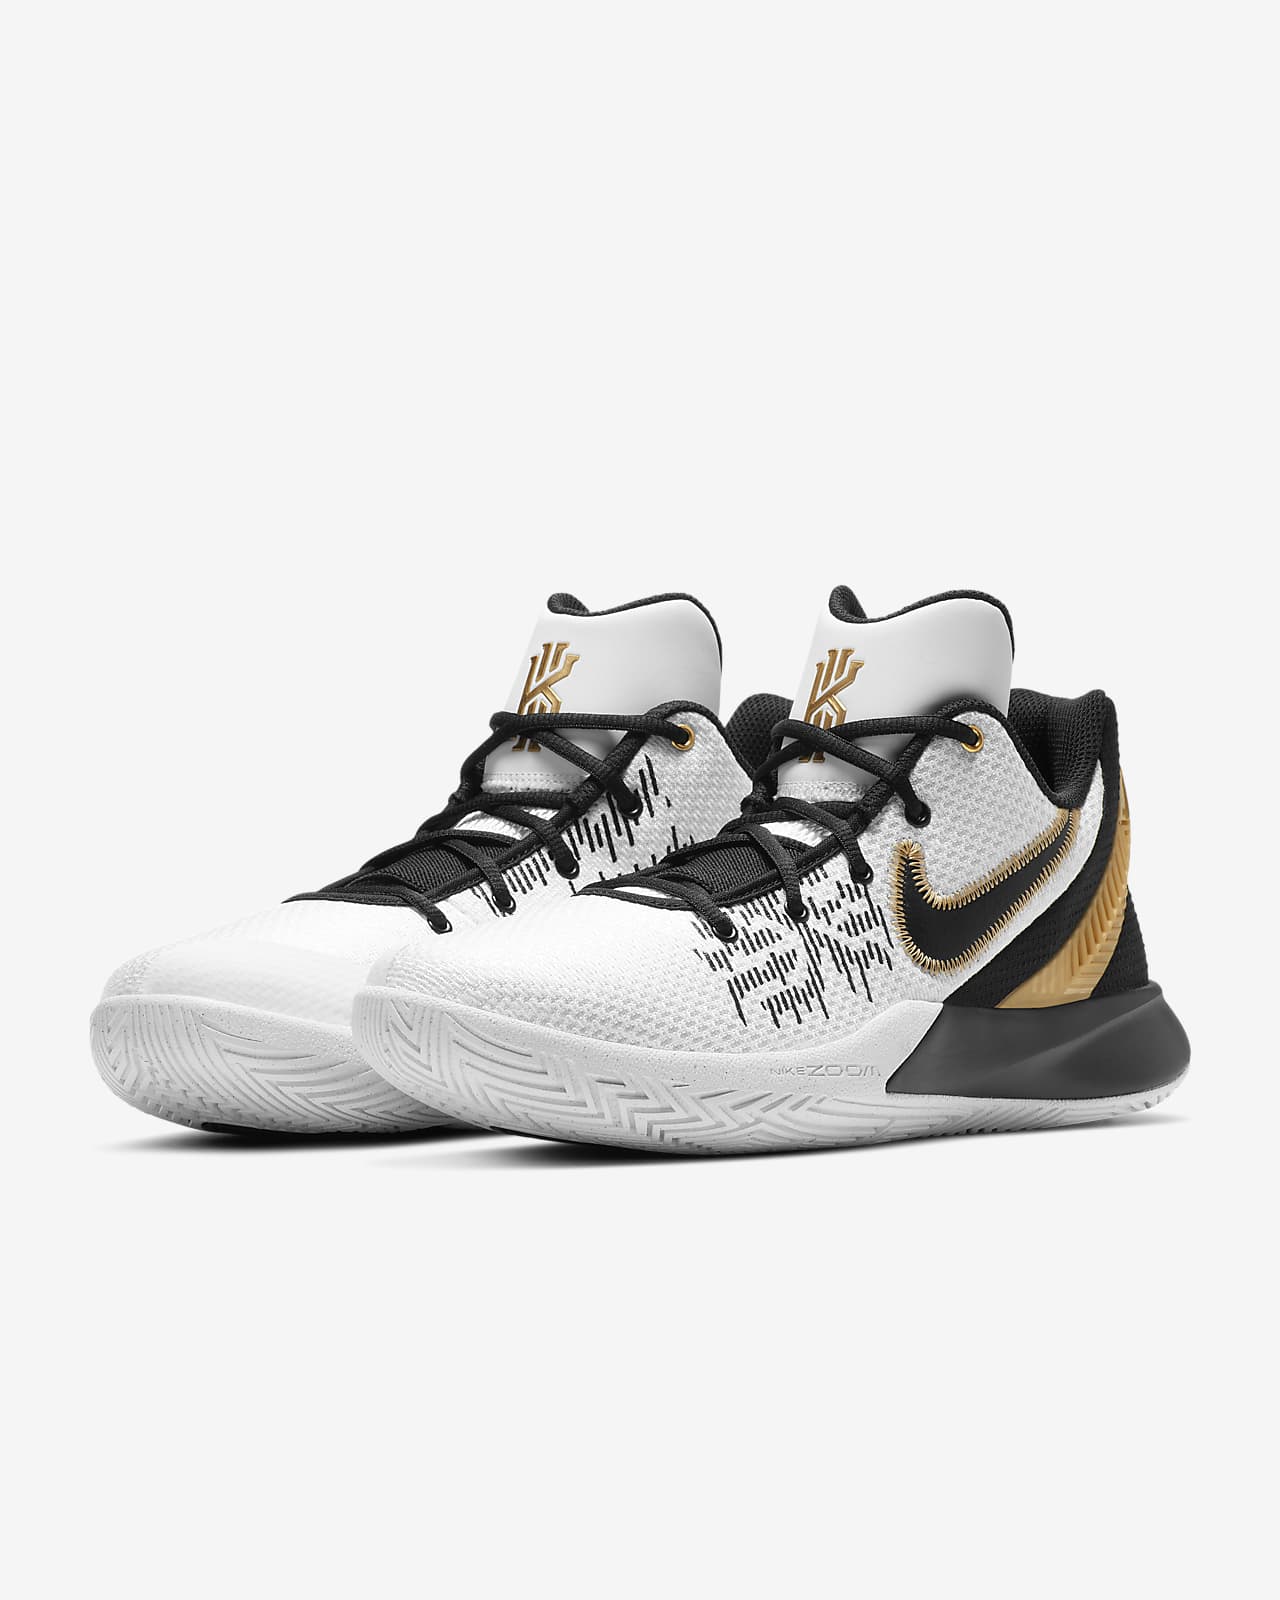 Kyrie Flytrap II Basketball Shoe. Nike SG